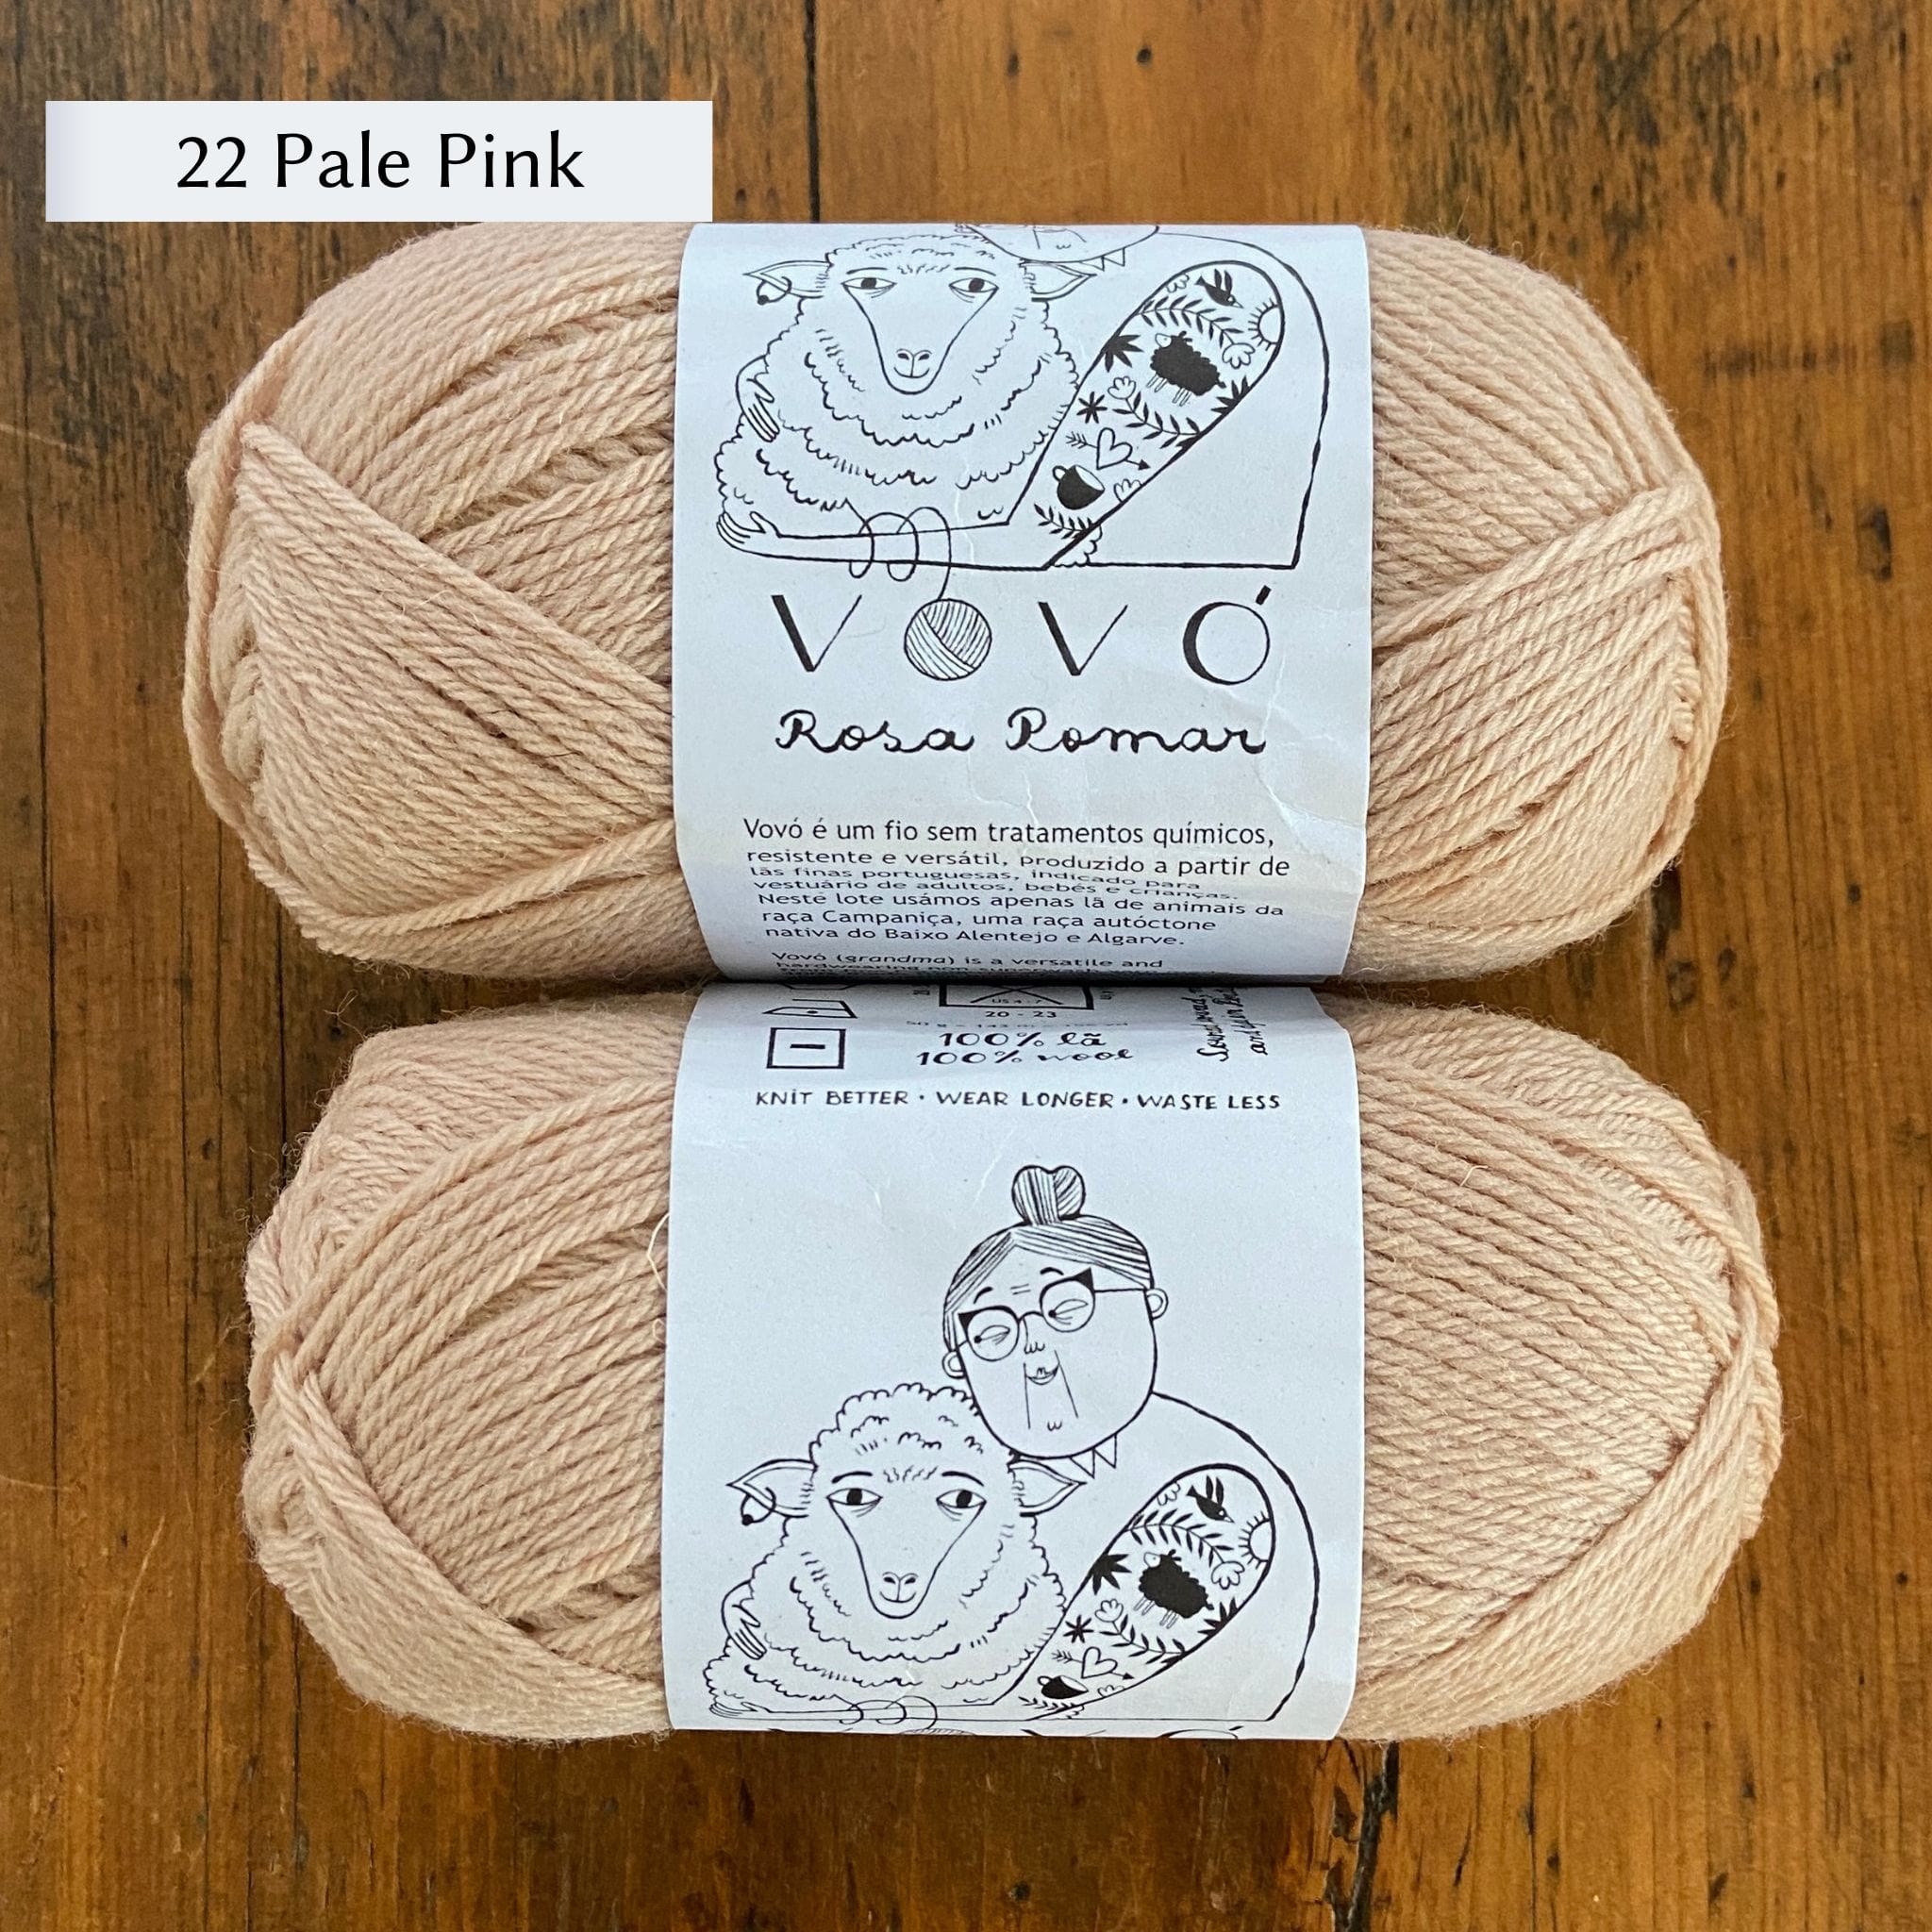 Bargain Arm Knitting Yarn Sale, Mammoth Reject yarn sale what is it?